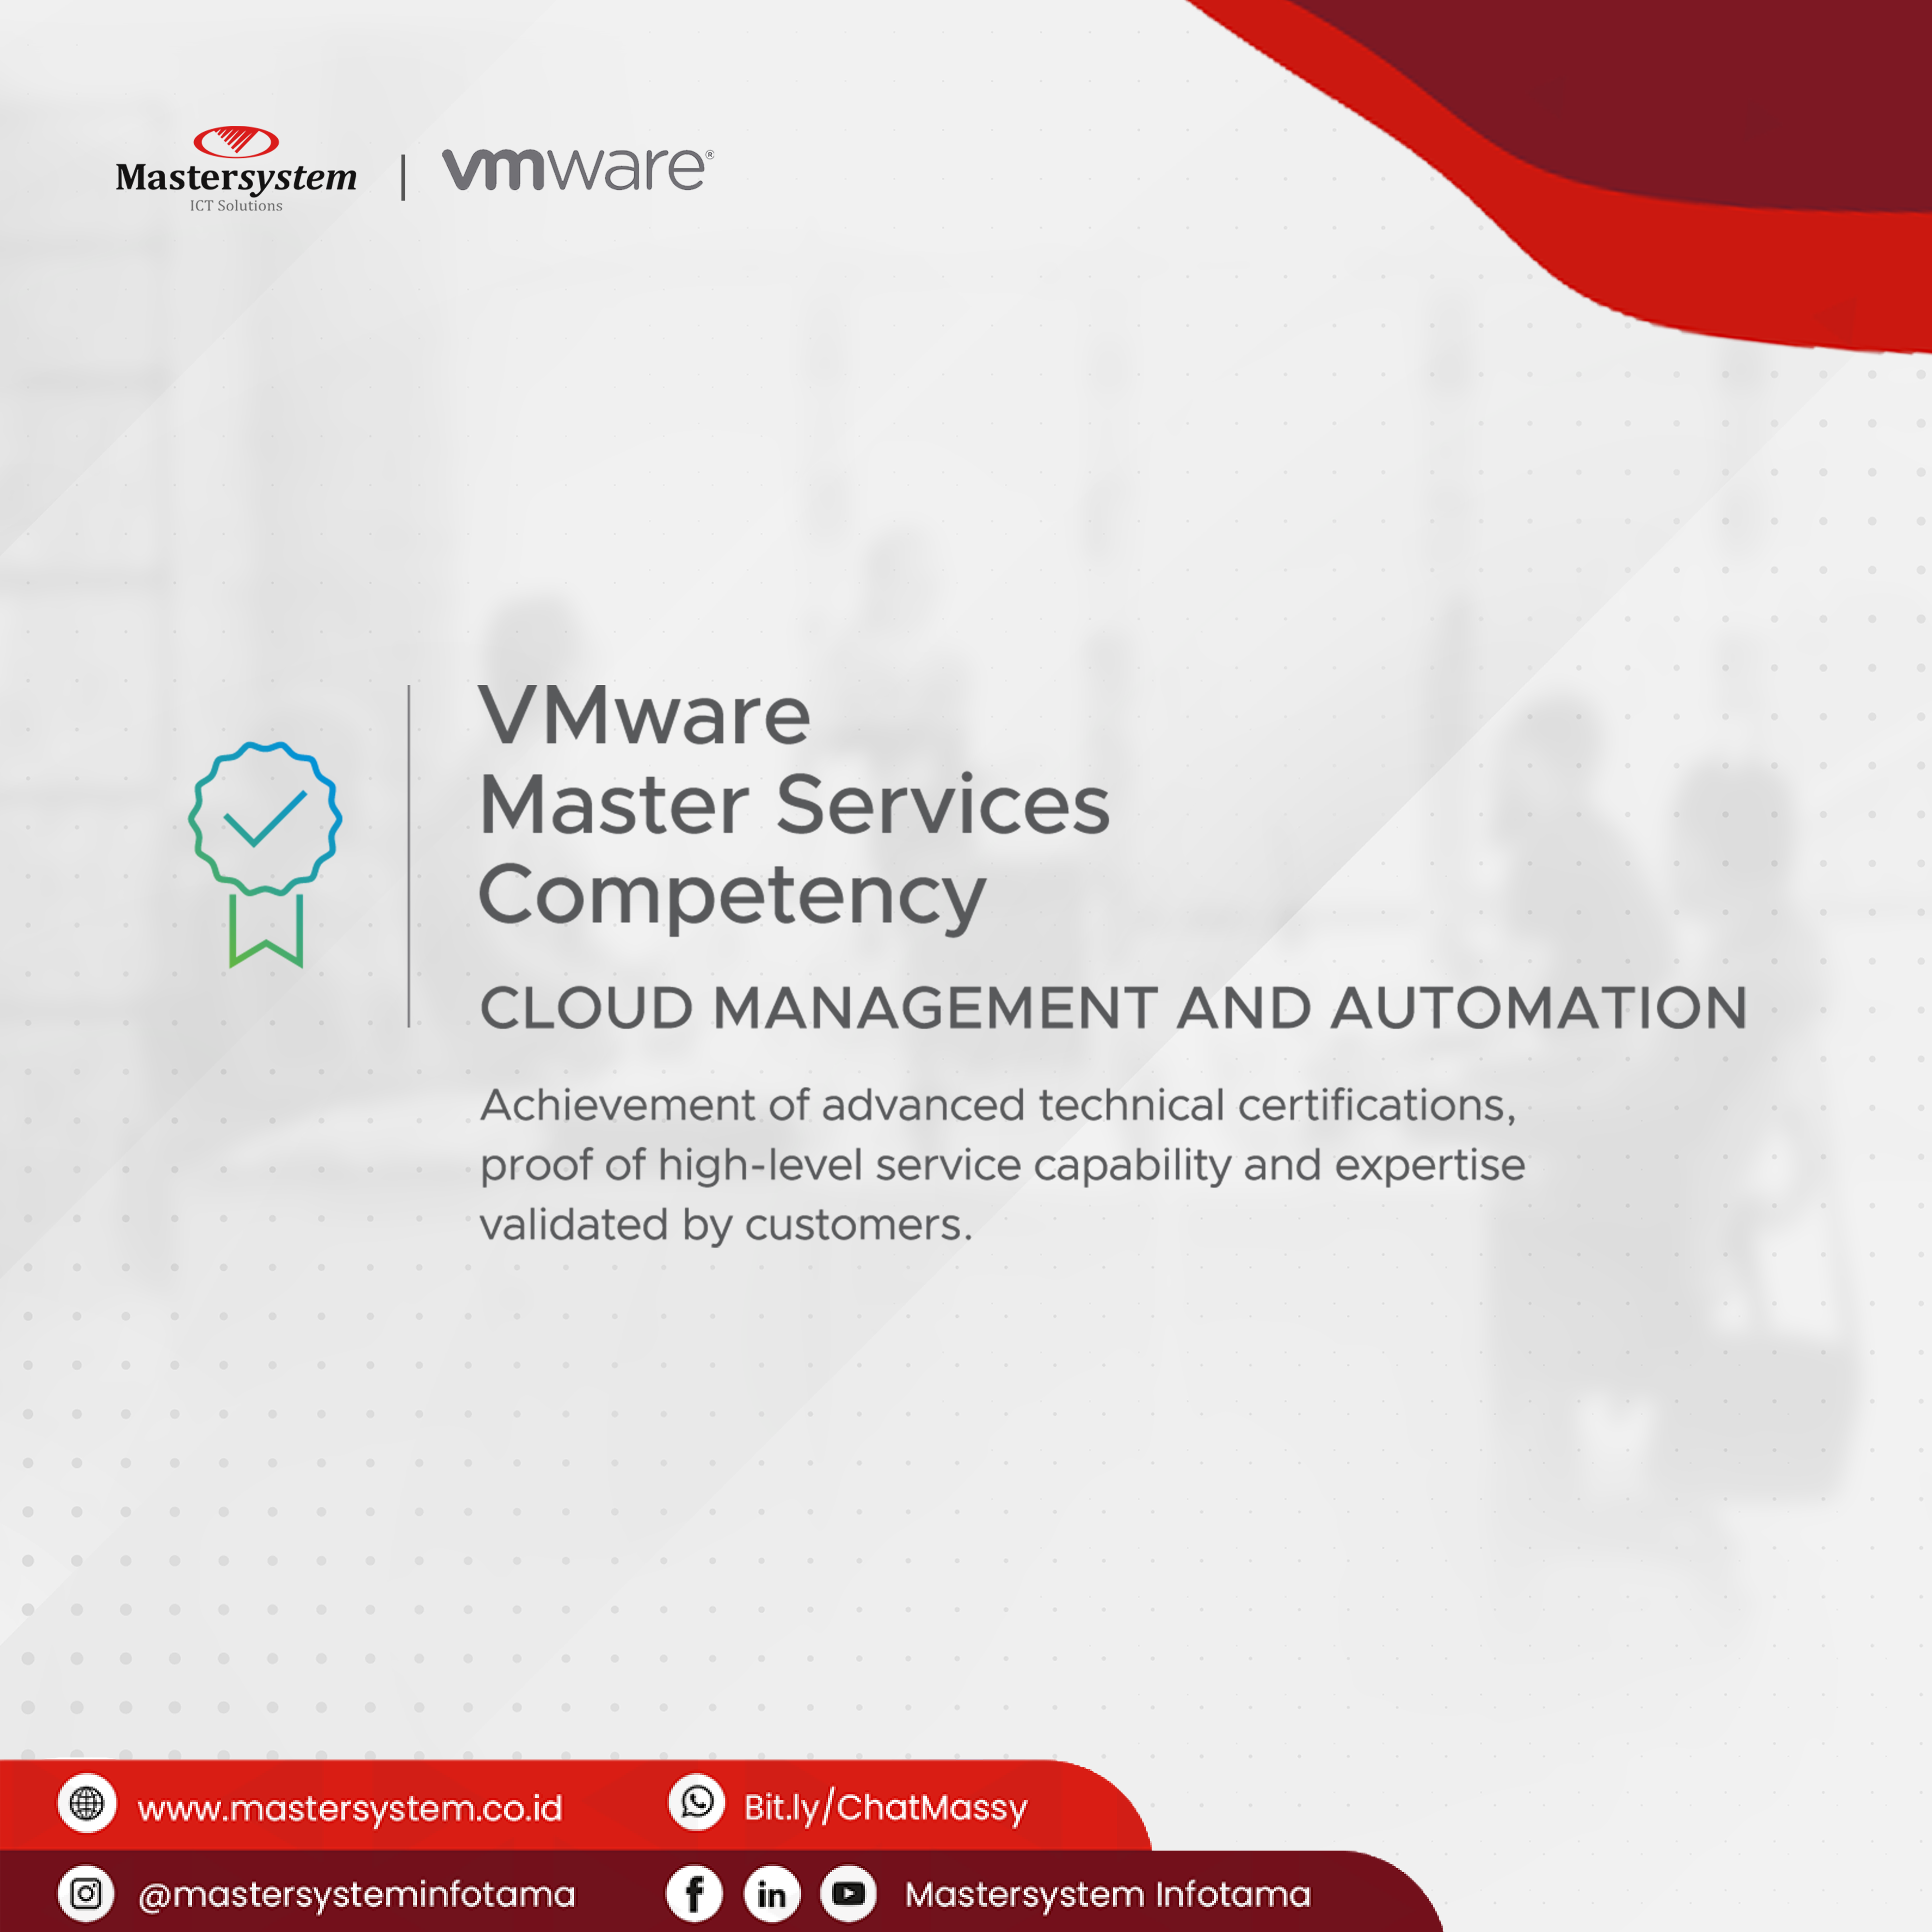 Mastersystem jadi partner Indonesia pertama yang menerima VMware Master Services Competency untuk Cloud Management & Automation.